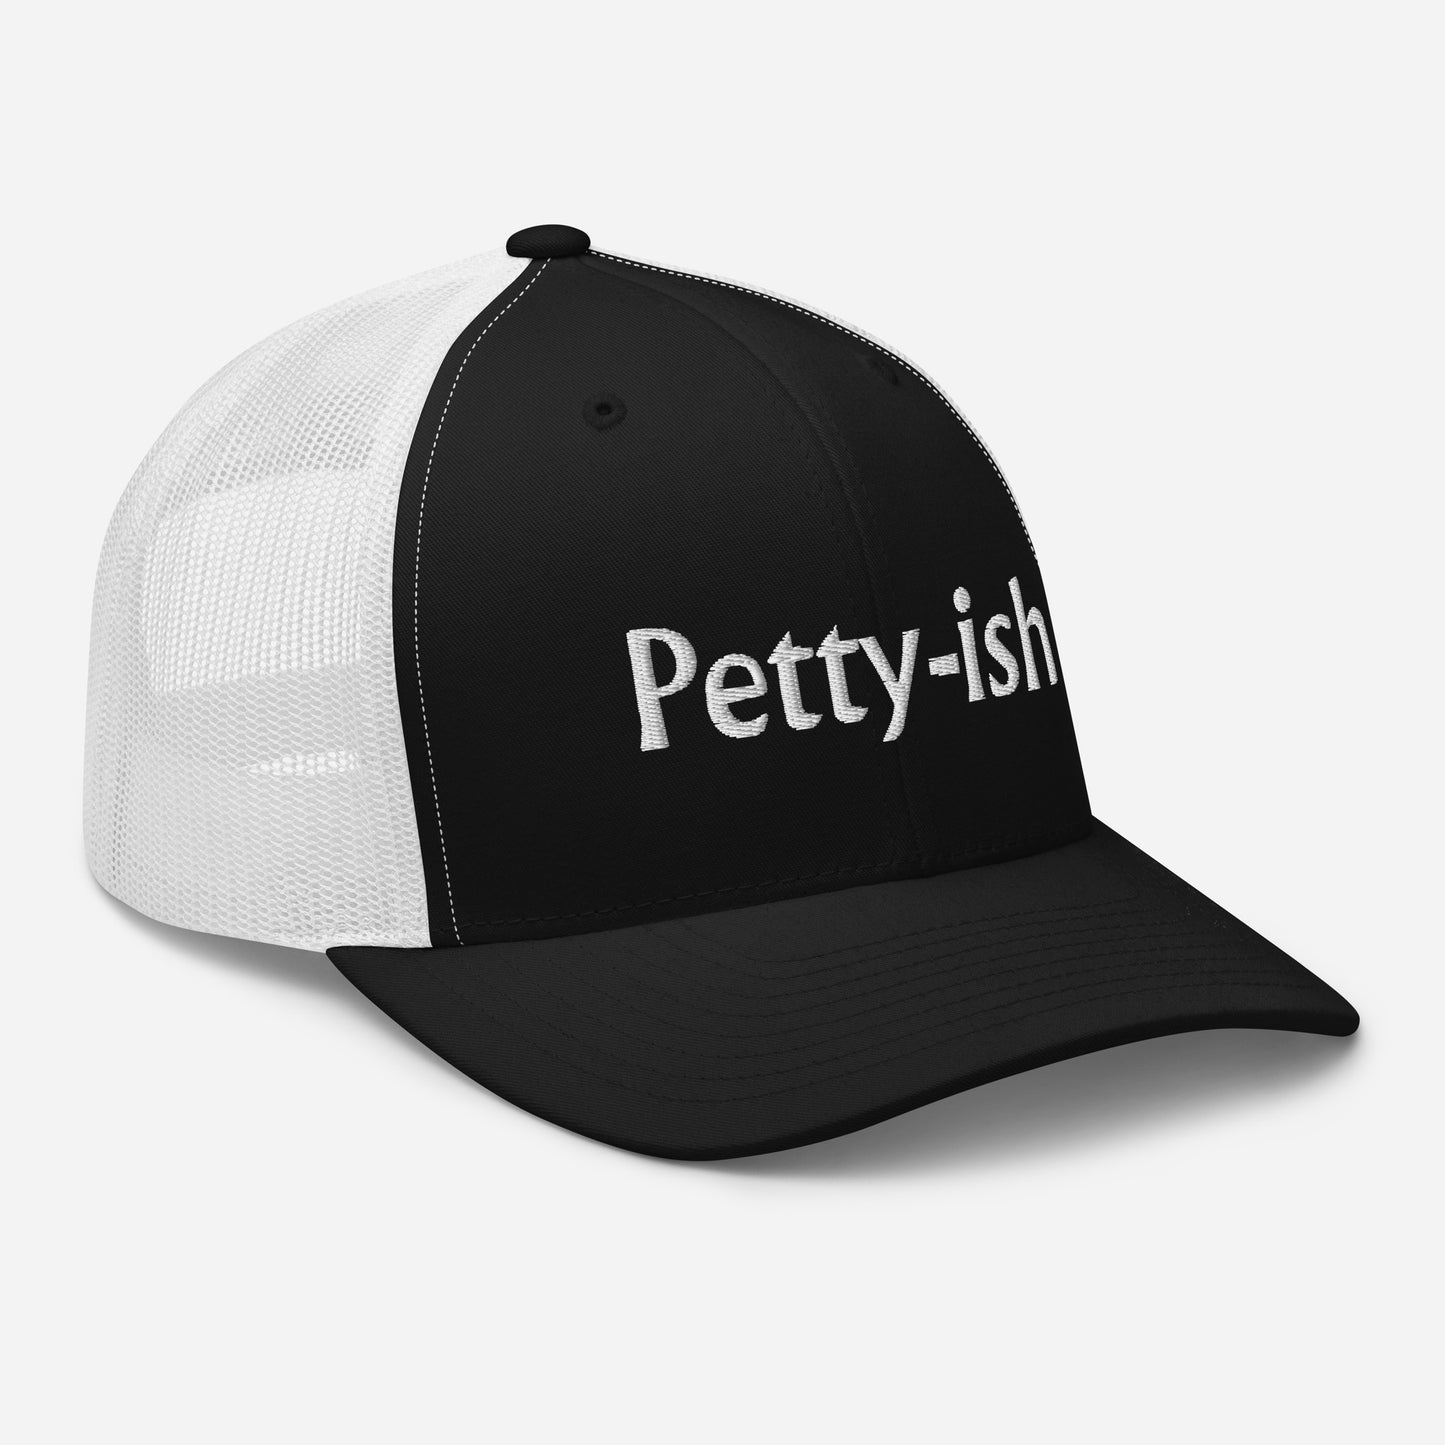 Petty-ish Trucker Cap